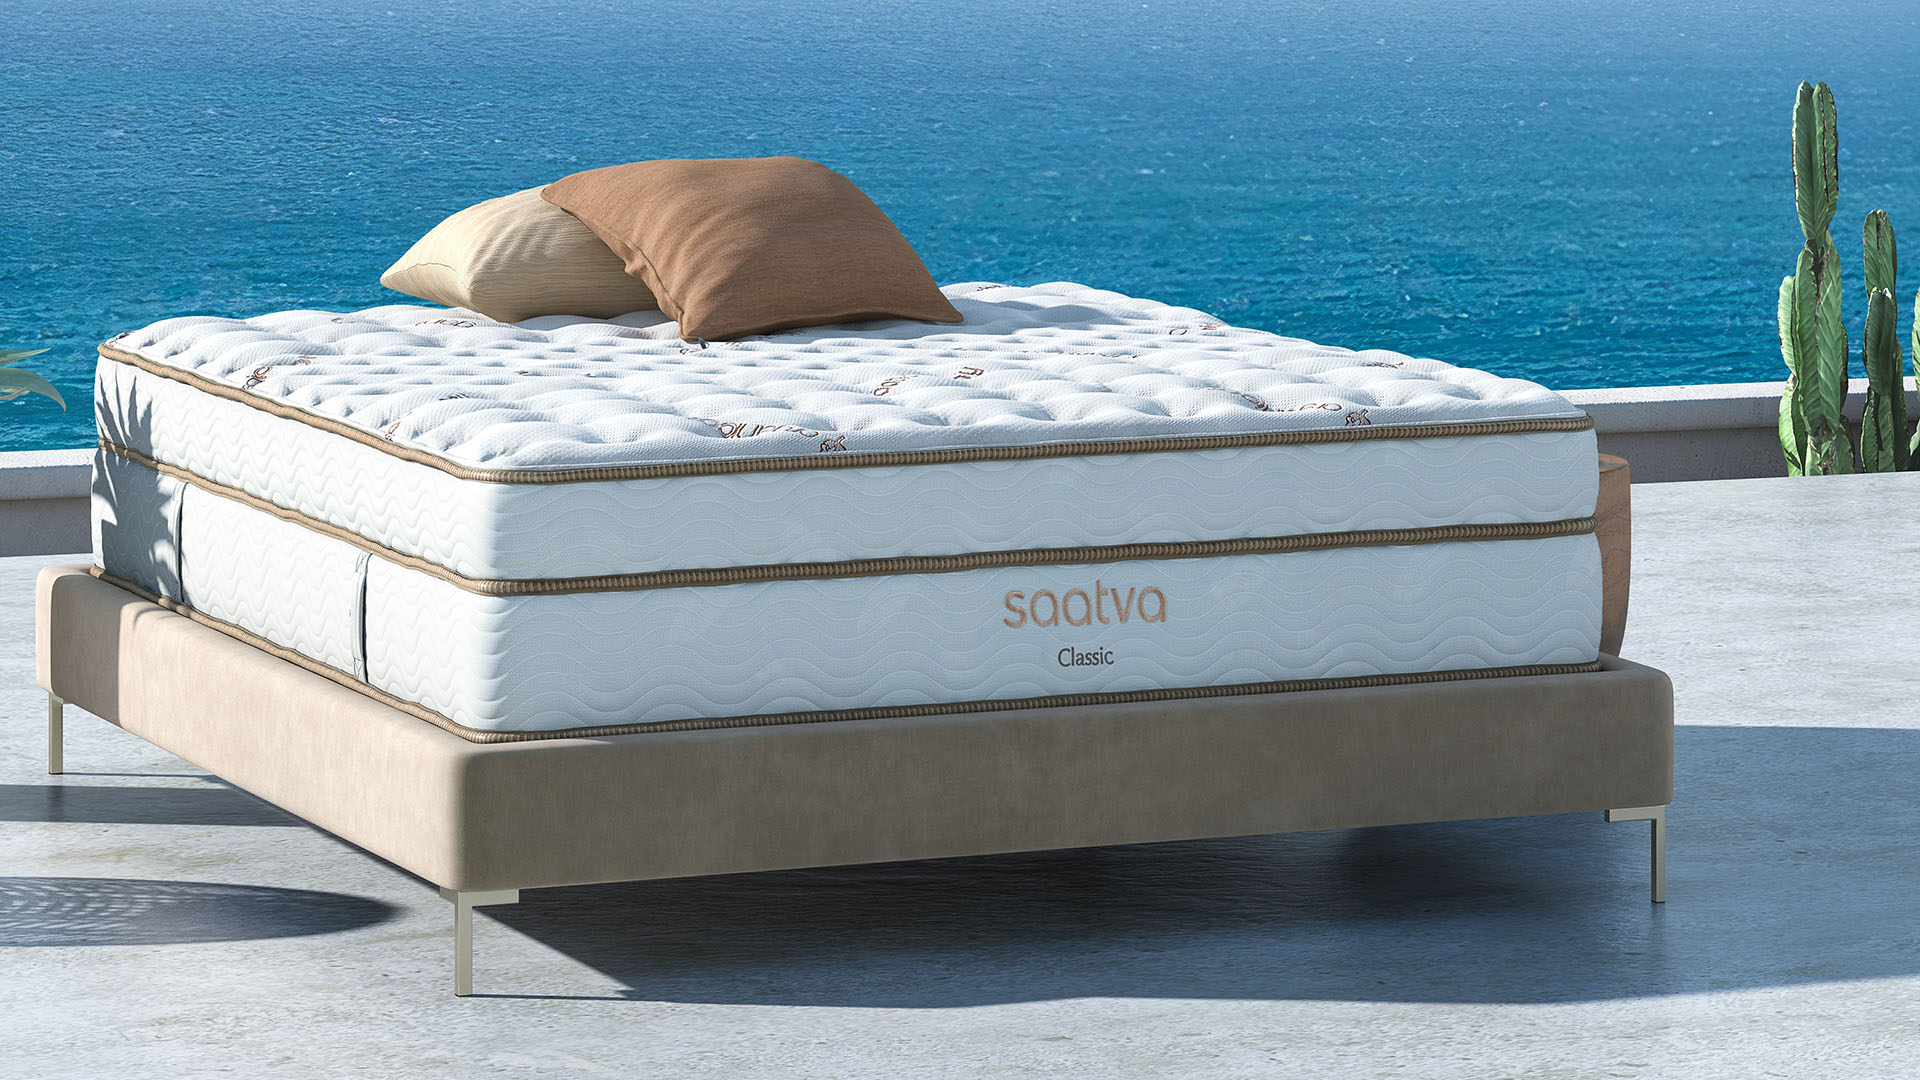 5 by 7 bed mattress